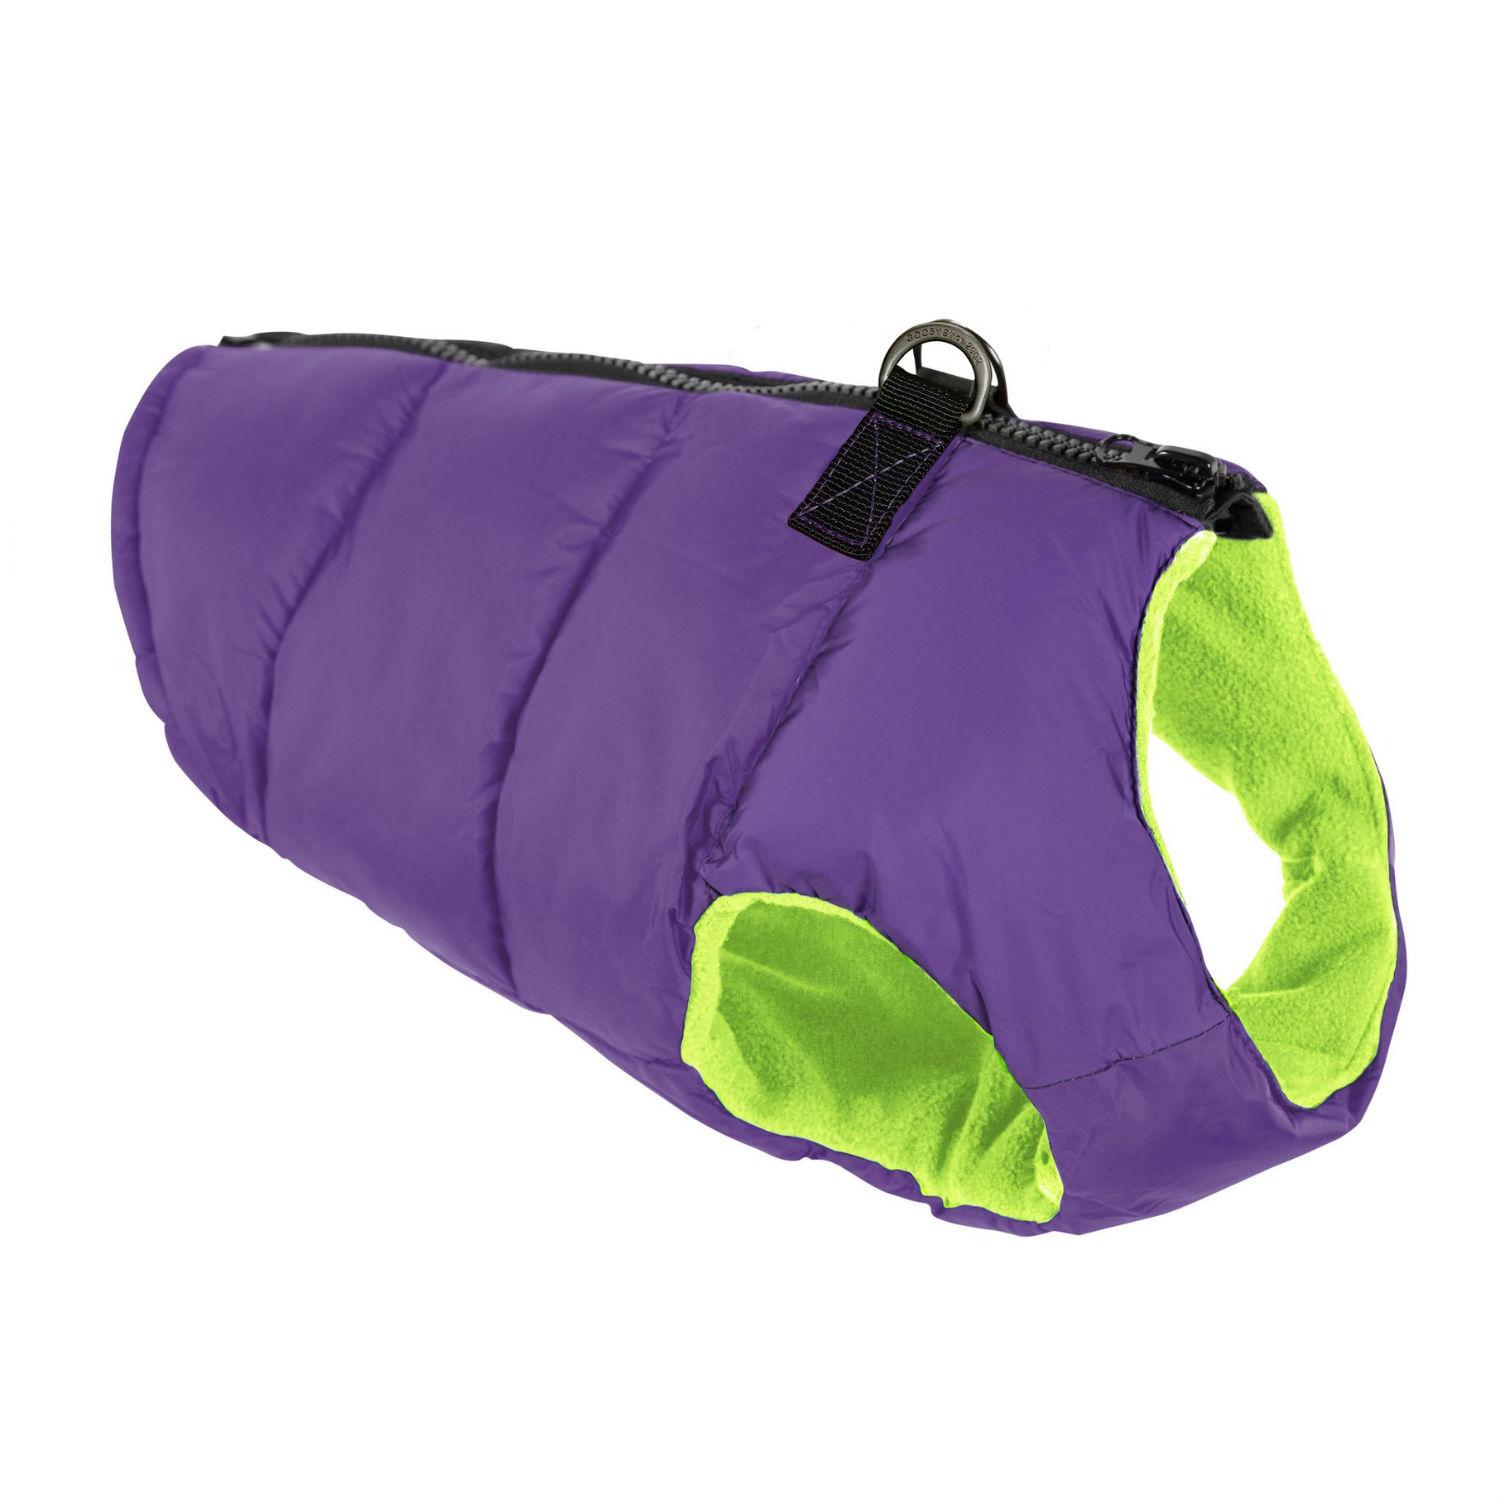 Gooby Padded Dog Vest - Purple